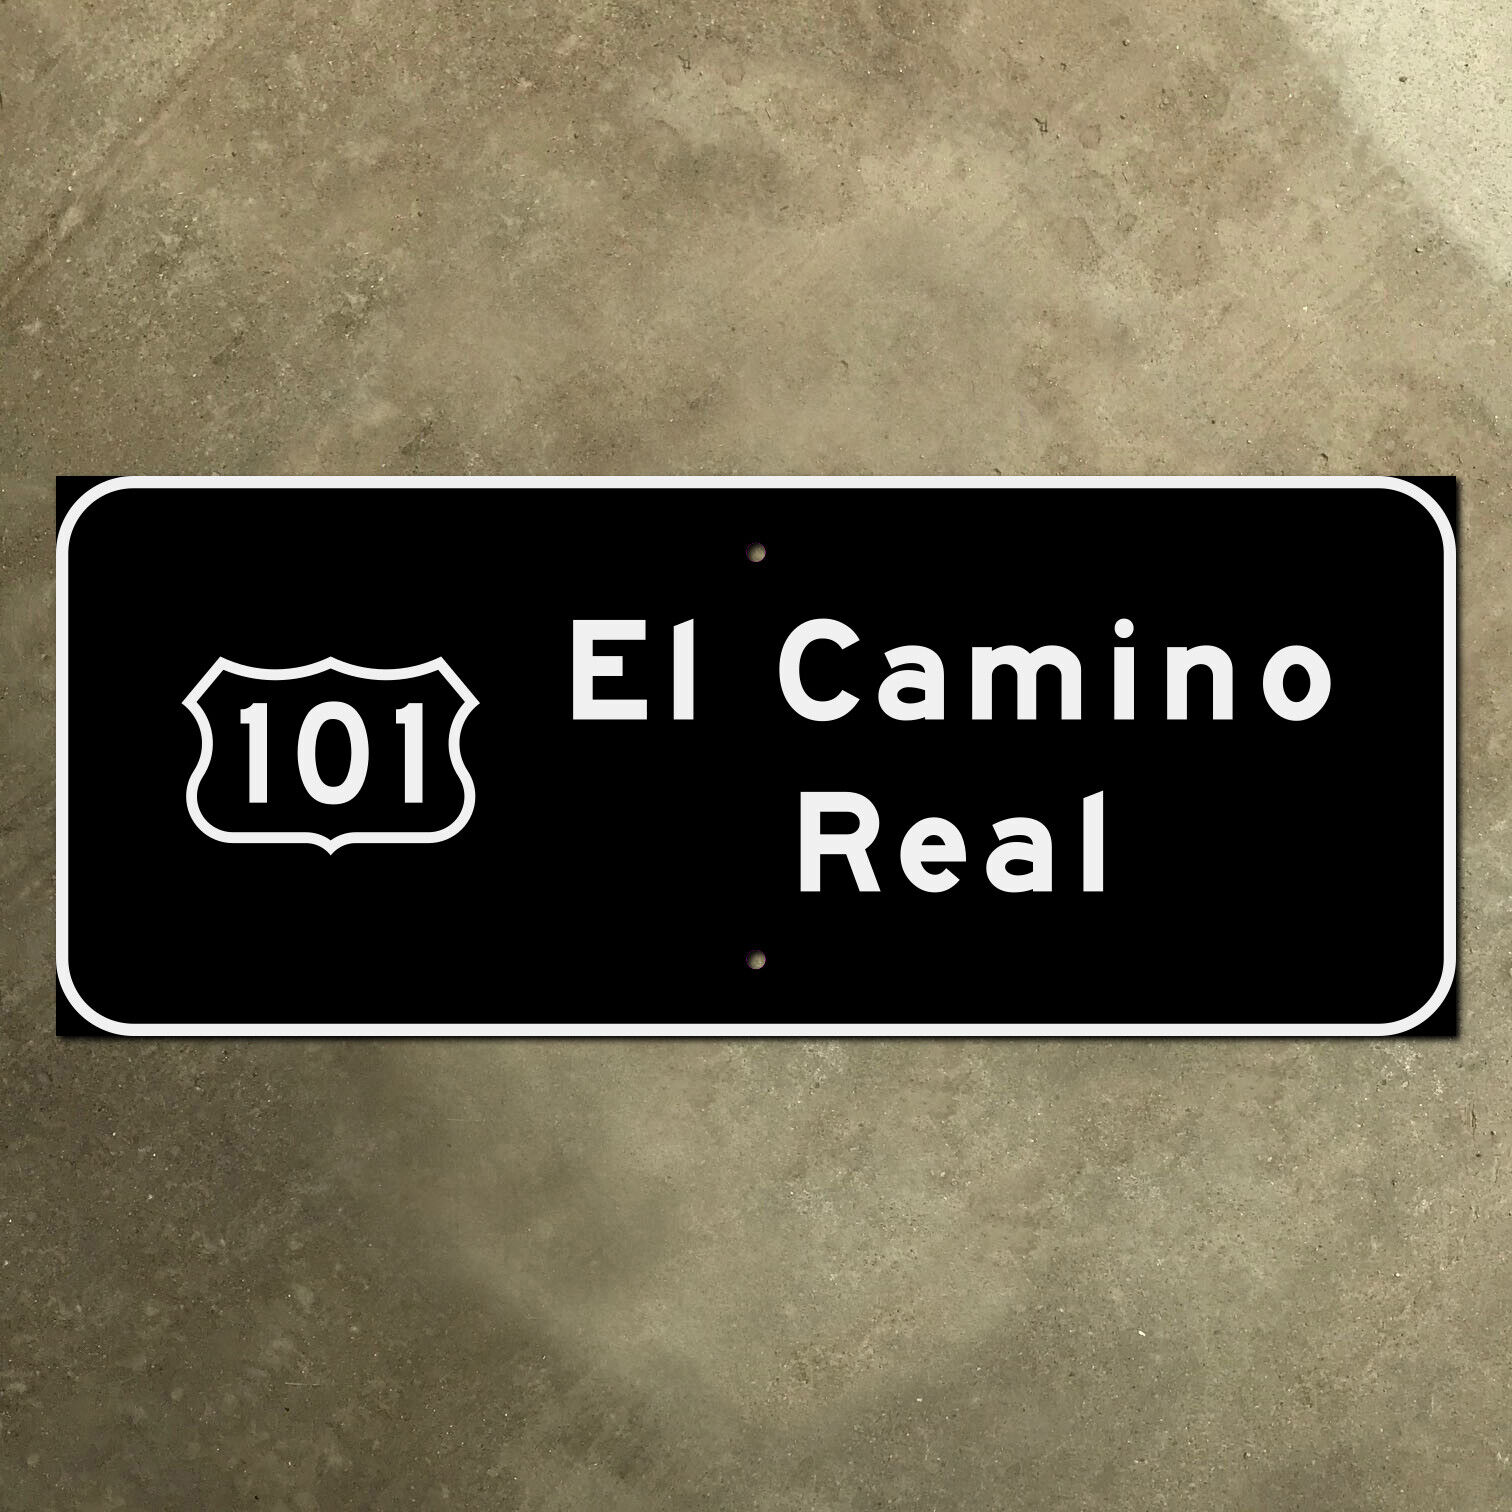 California US 101 El Camino Real highway road freeway guide sign 1958 18x7